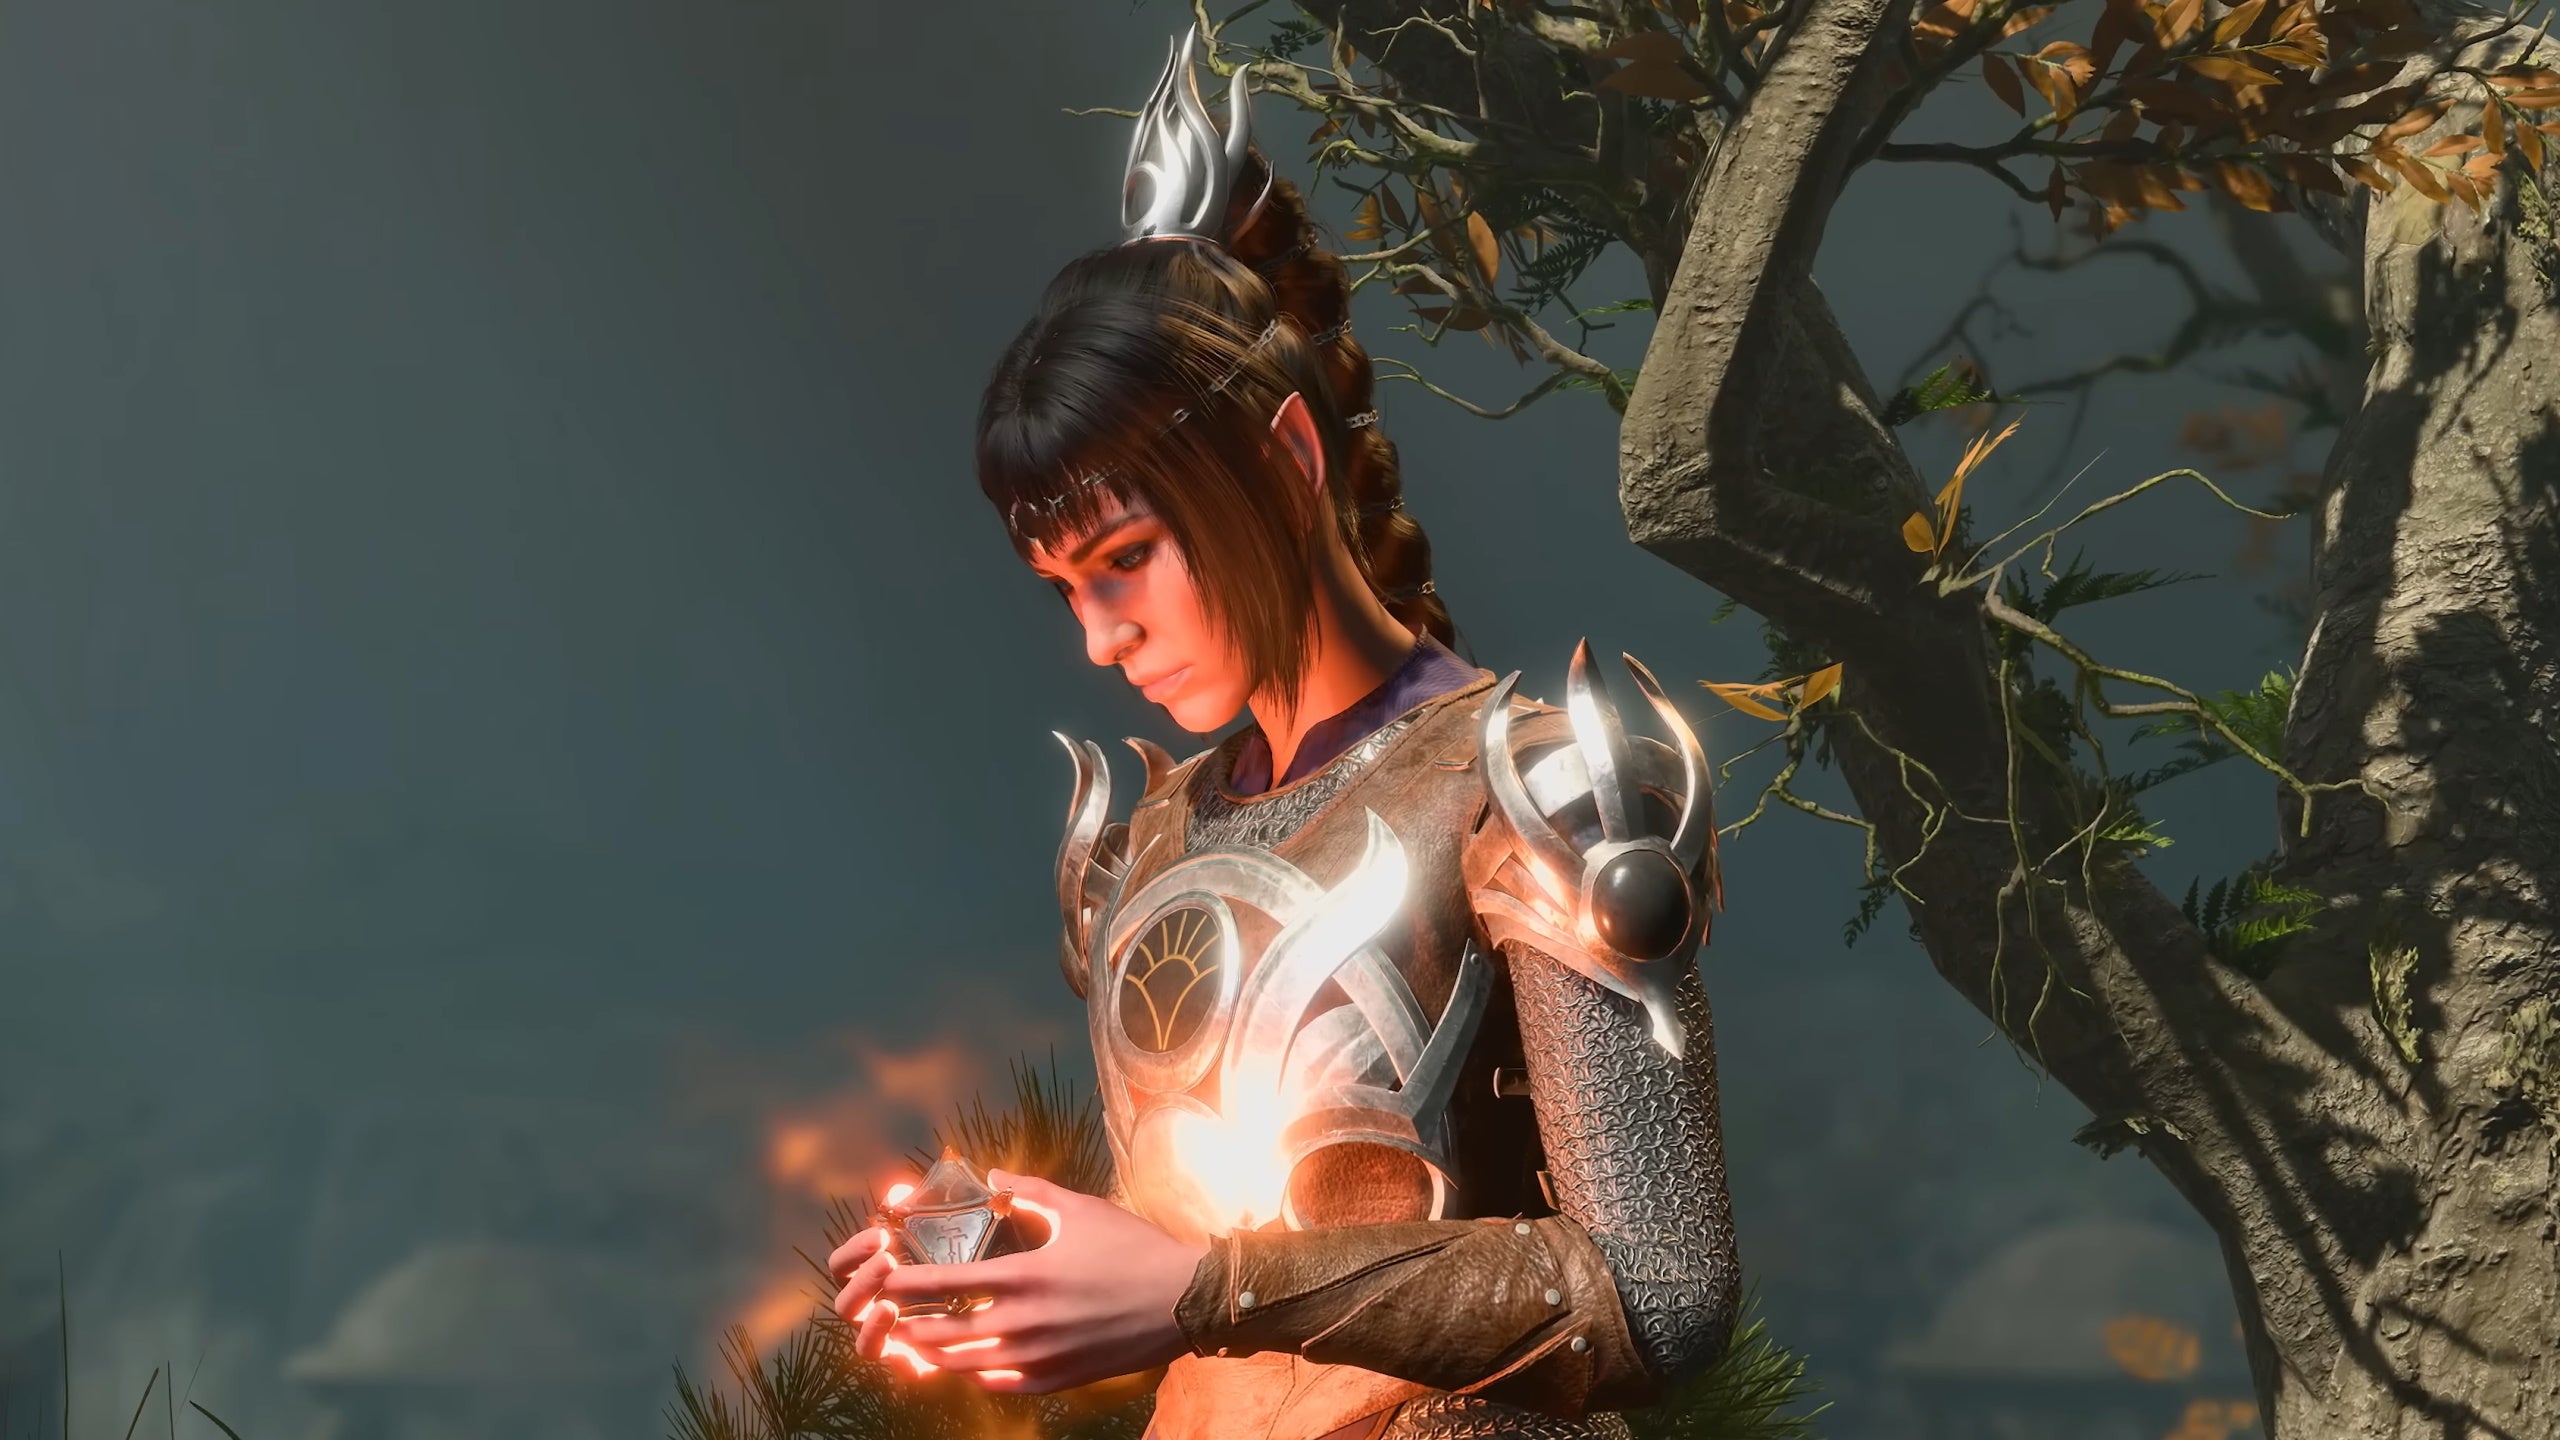 Shadowheart cradles a glowing orb in her hands in Baldur's Gate 3